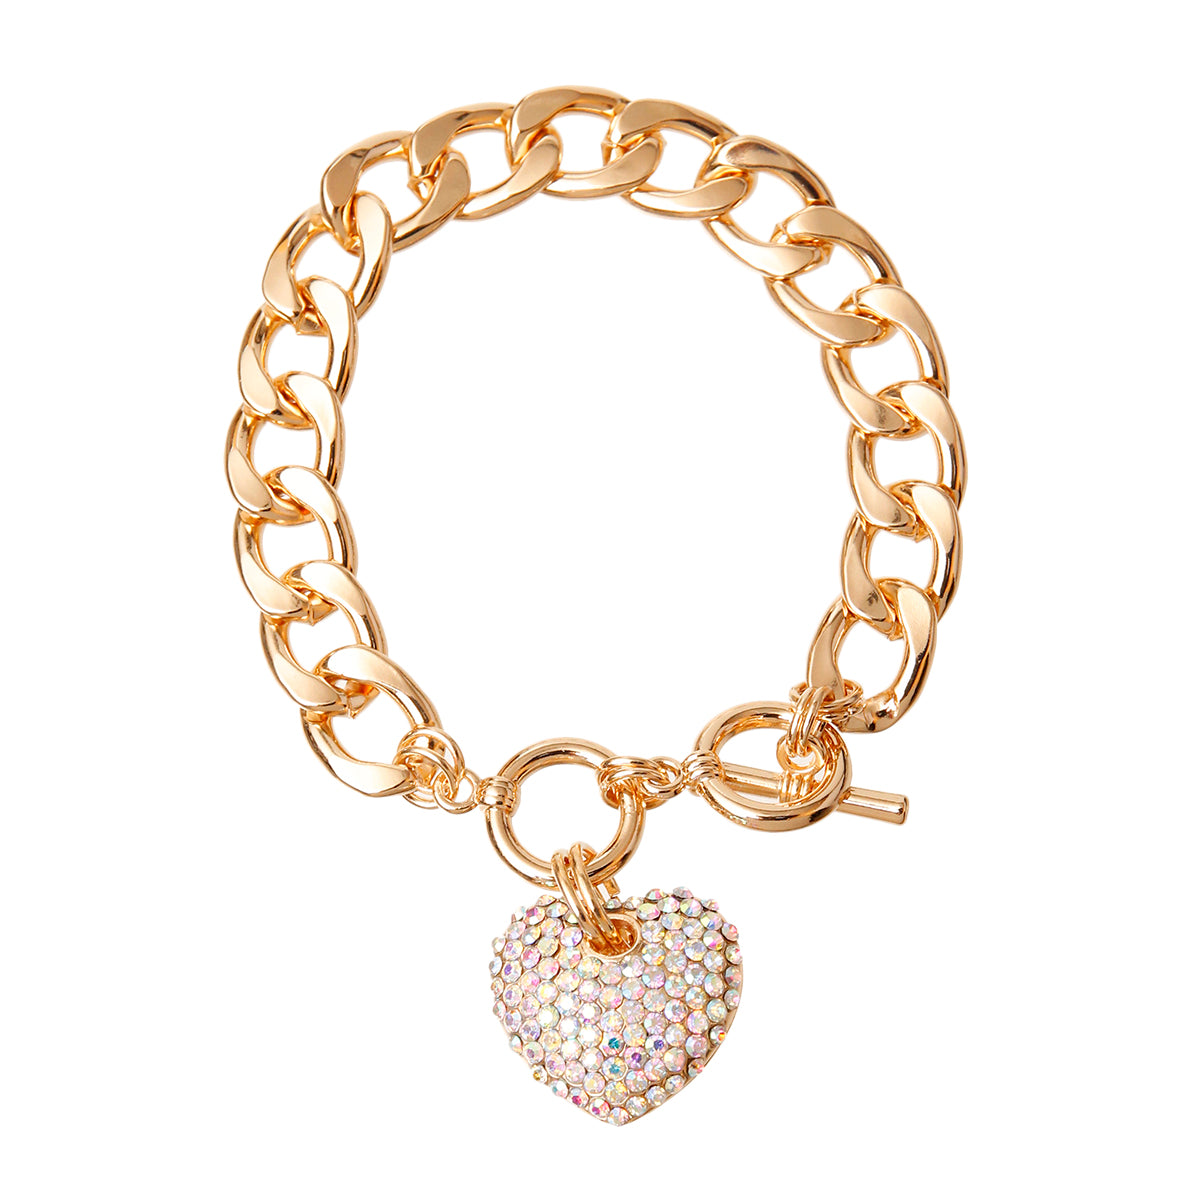 Aurora Borealis and Gold Heart Bracelet